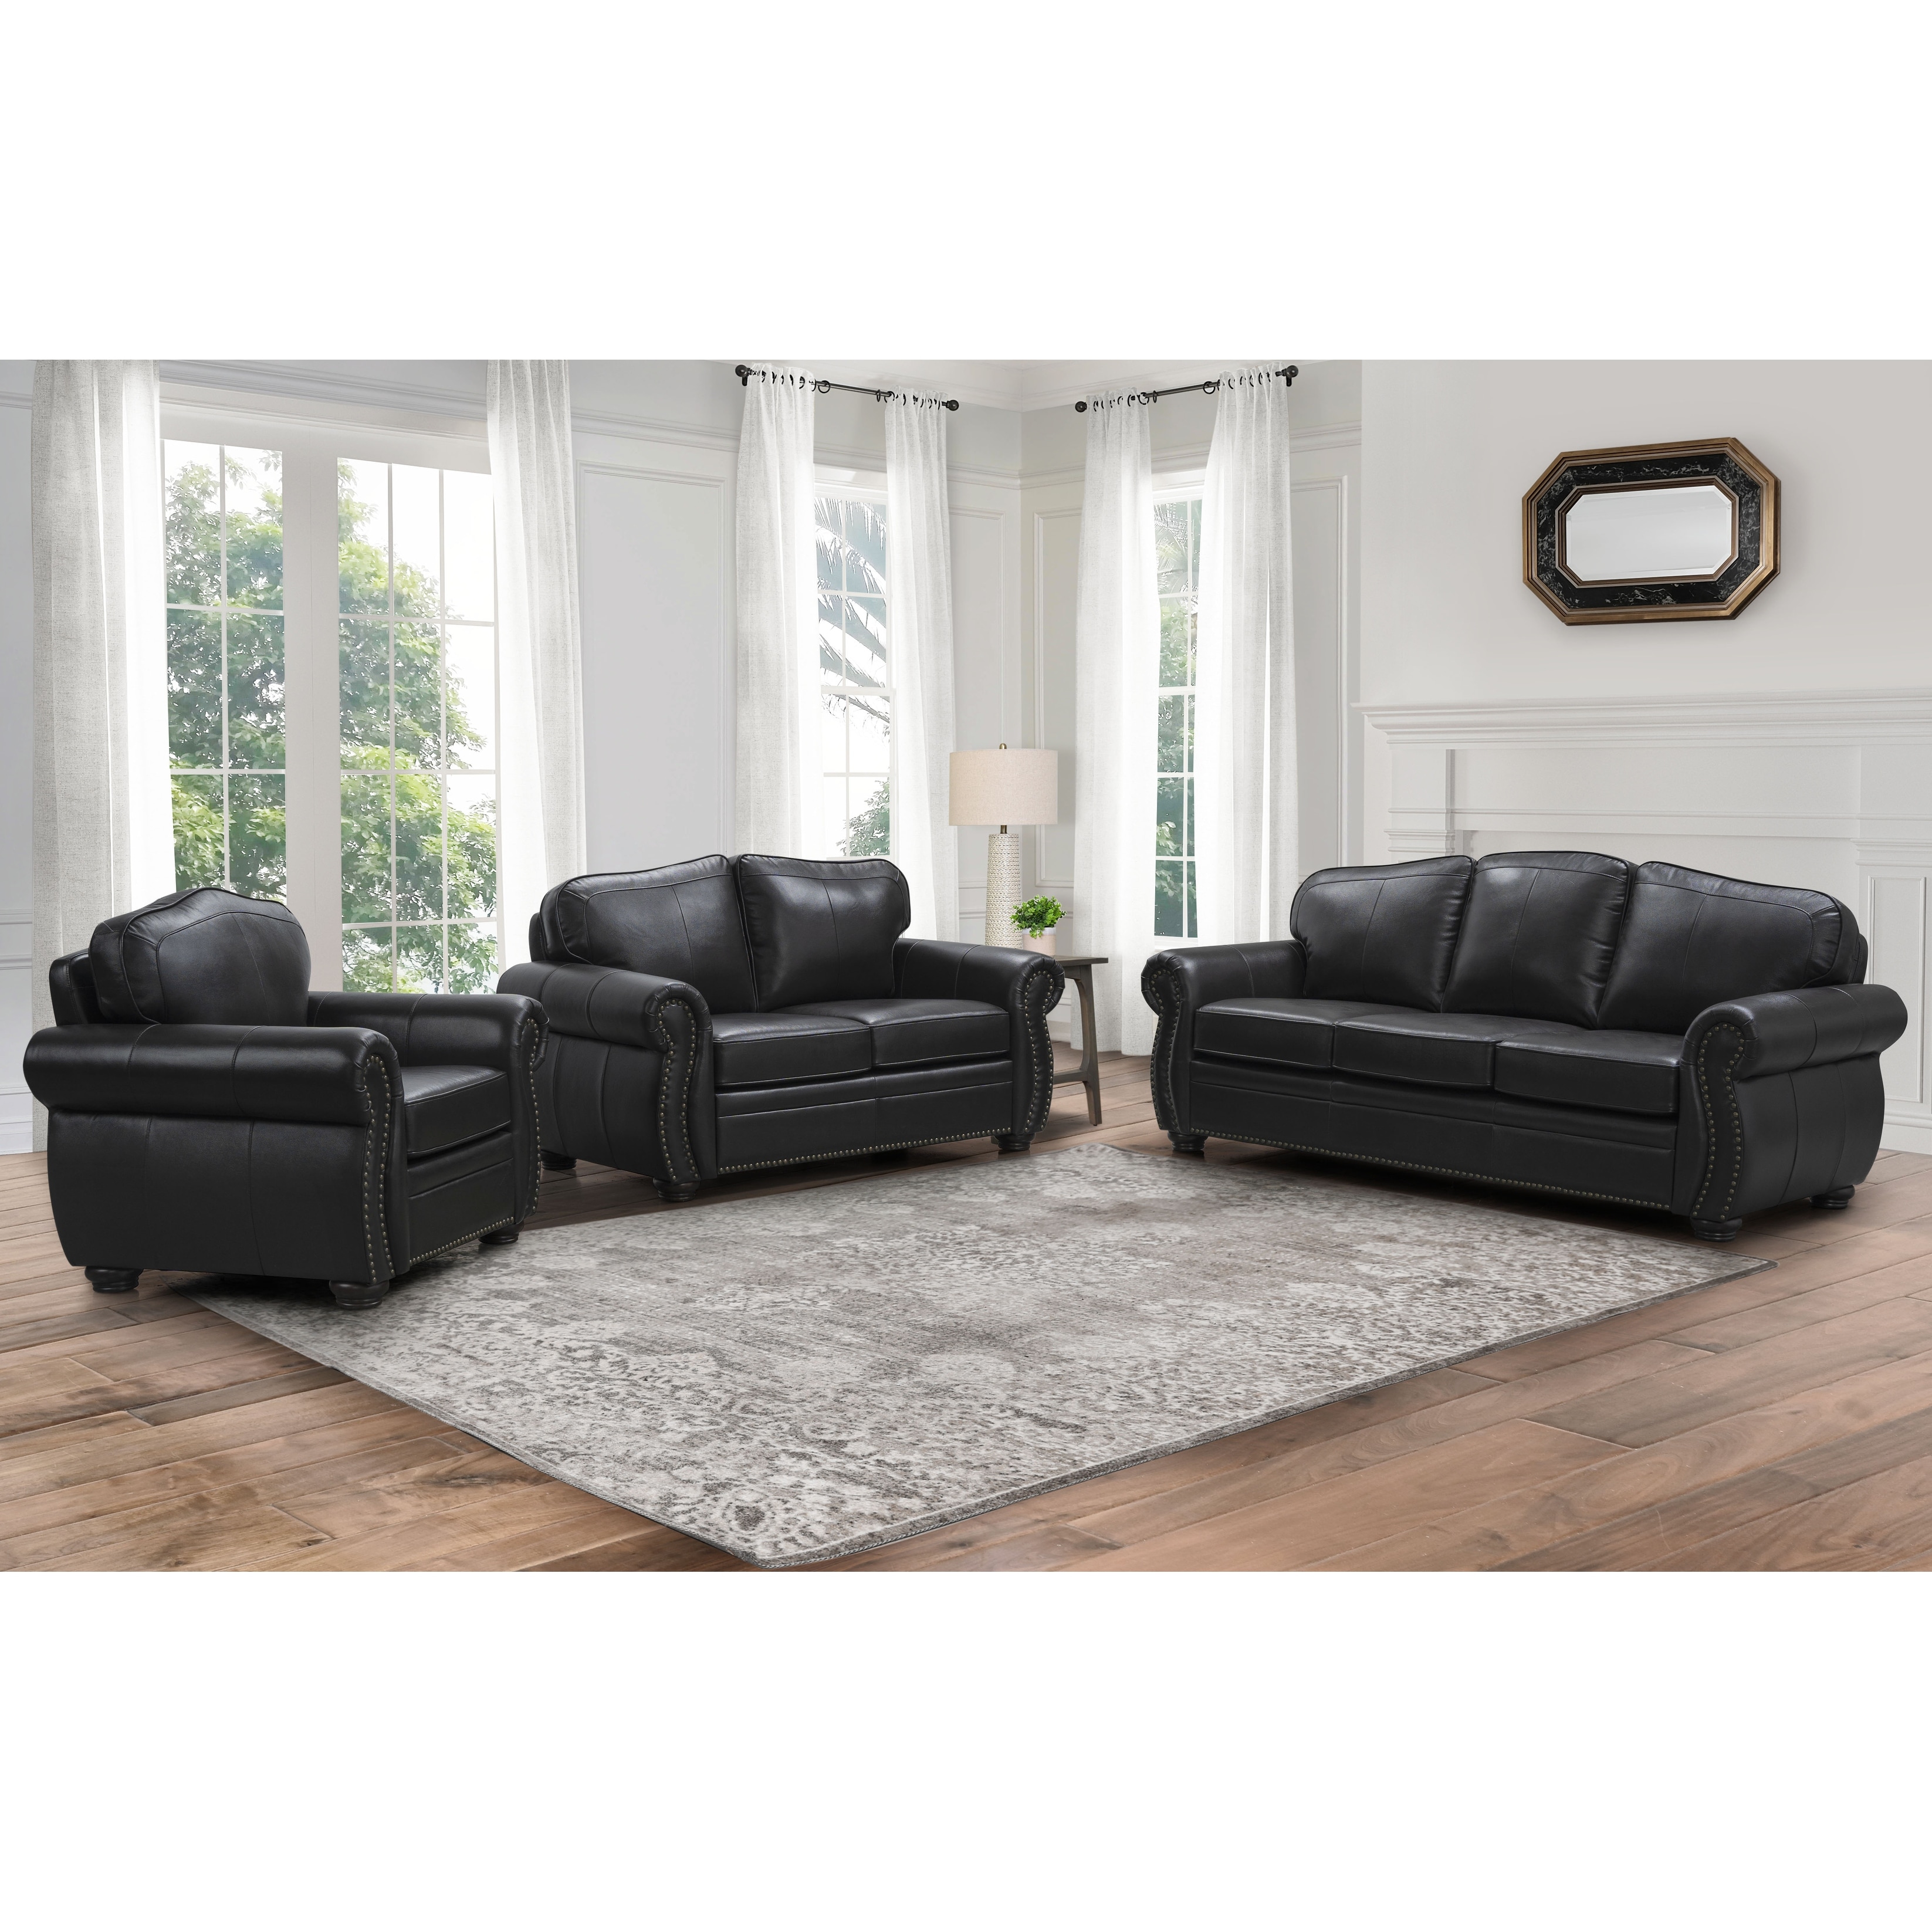 Abbyson Richfield Brown Top Grain Leather 3 Piece Living Room Sofa Set Overstock 5954223